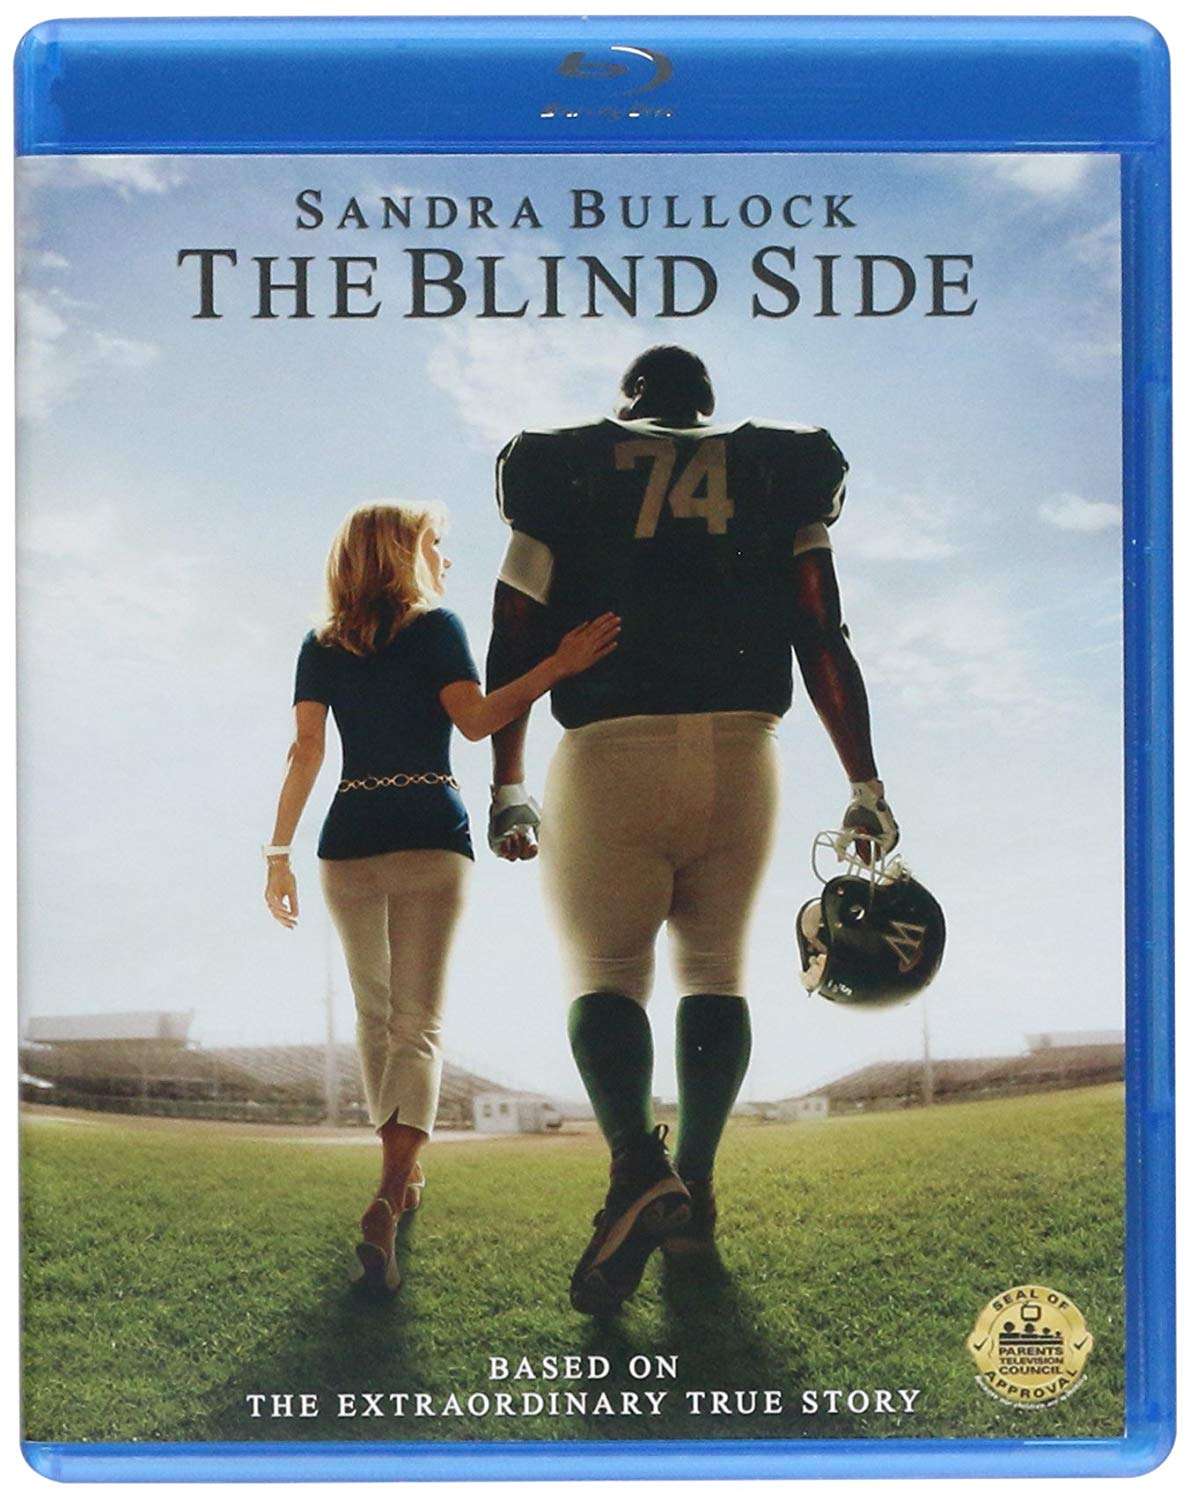 The Blind Side (2009) FullHD BDRip 1080p Ac3 ITA (DVD Resync) DTS-HD MA Ac3 ENG Subs - Krikk